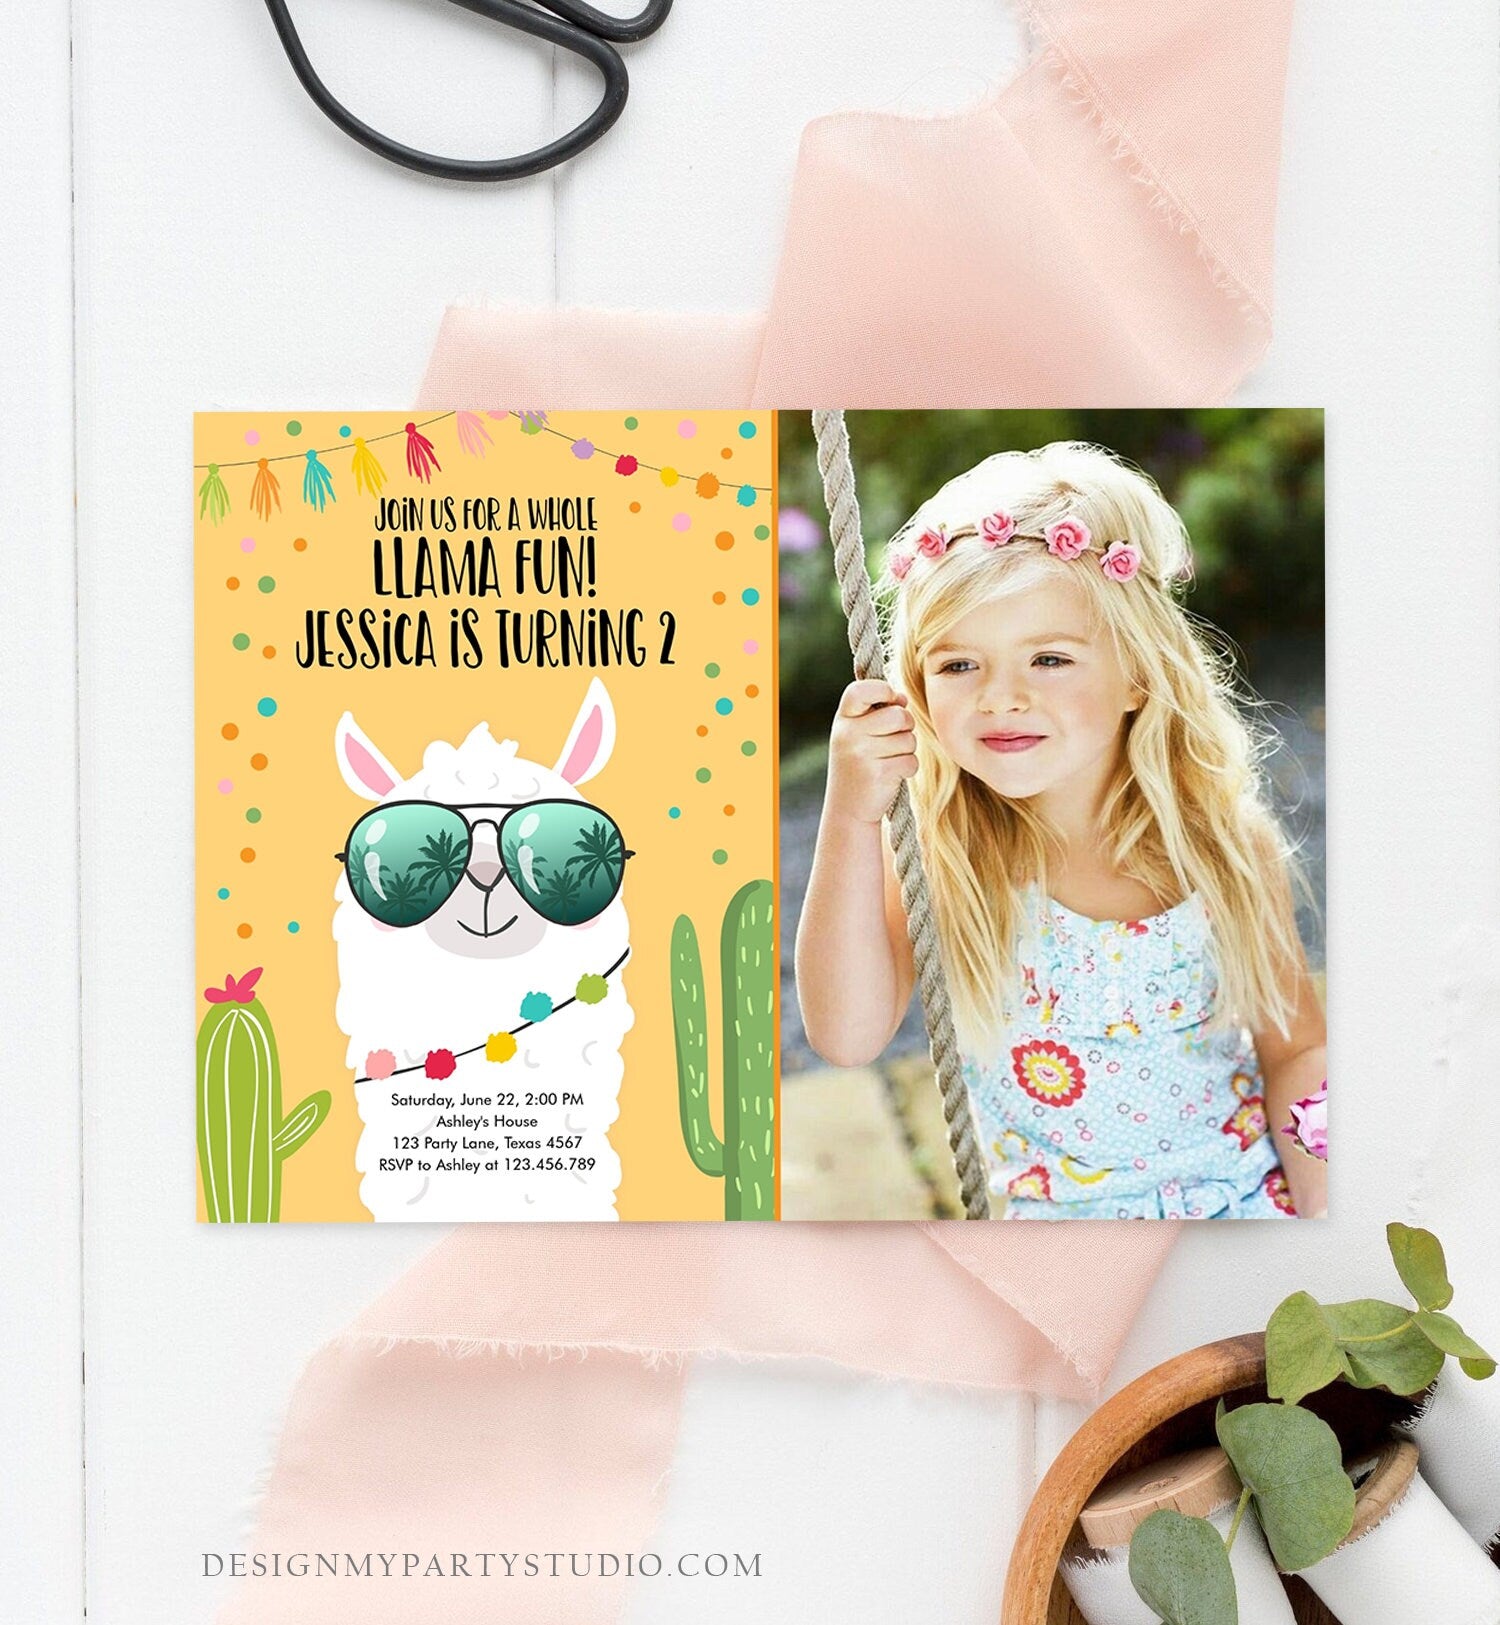 Editable Whole Llama Fun Birthday Invitation Llama Fiesta Cactus Confetti Girl Yellow Alpaca Photo Download Printable Template Corjl 0079